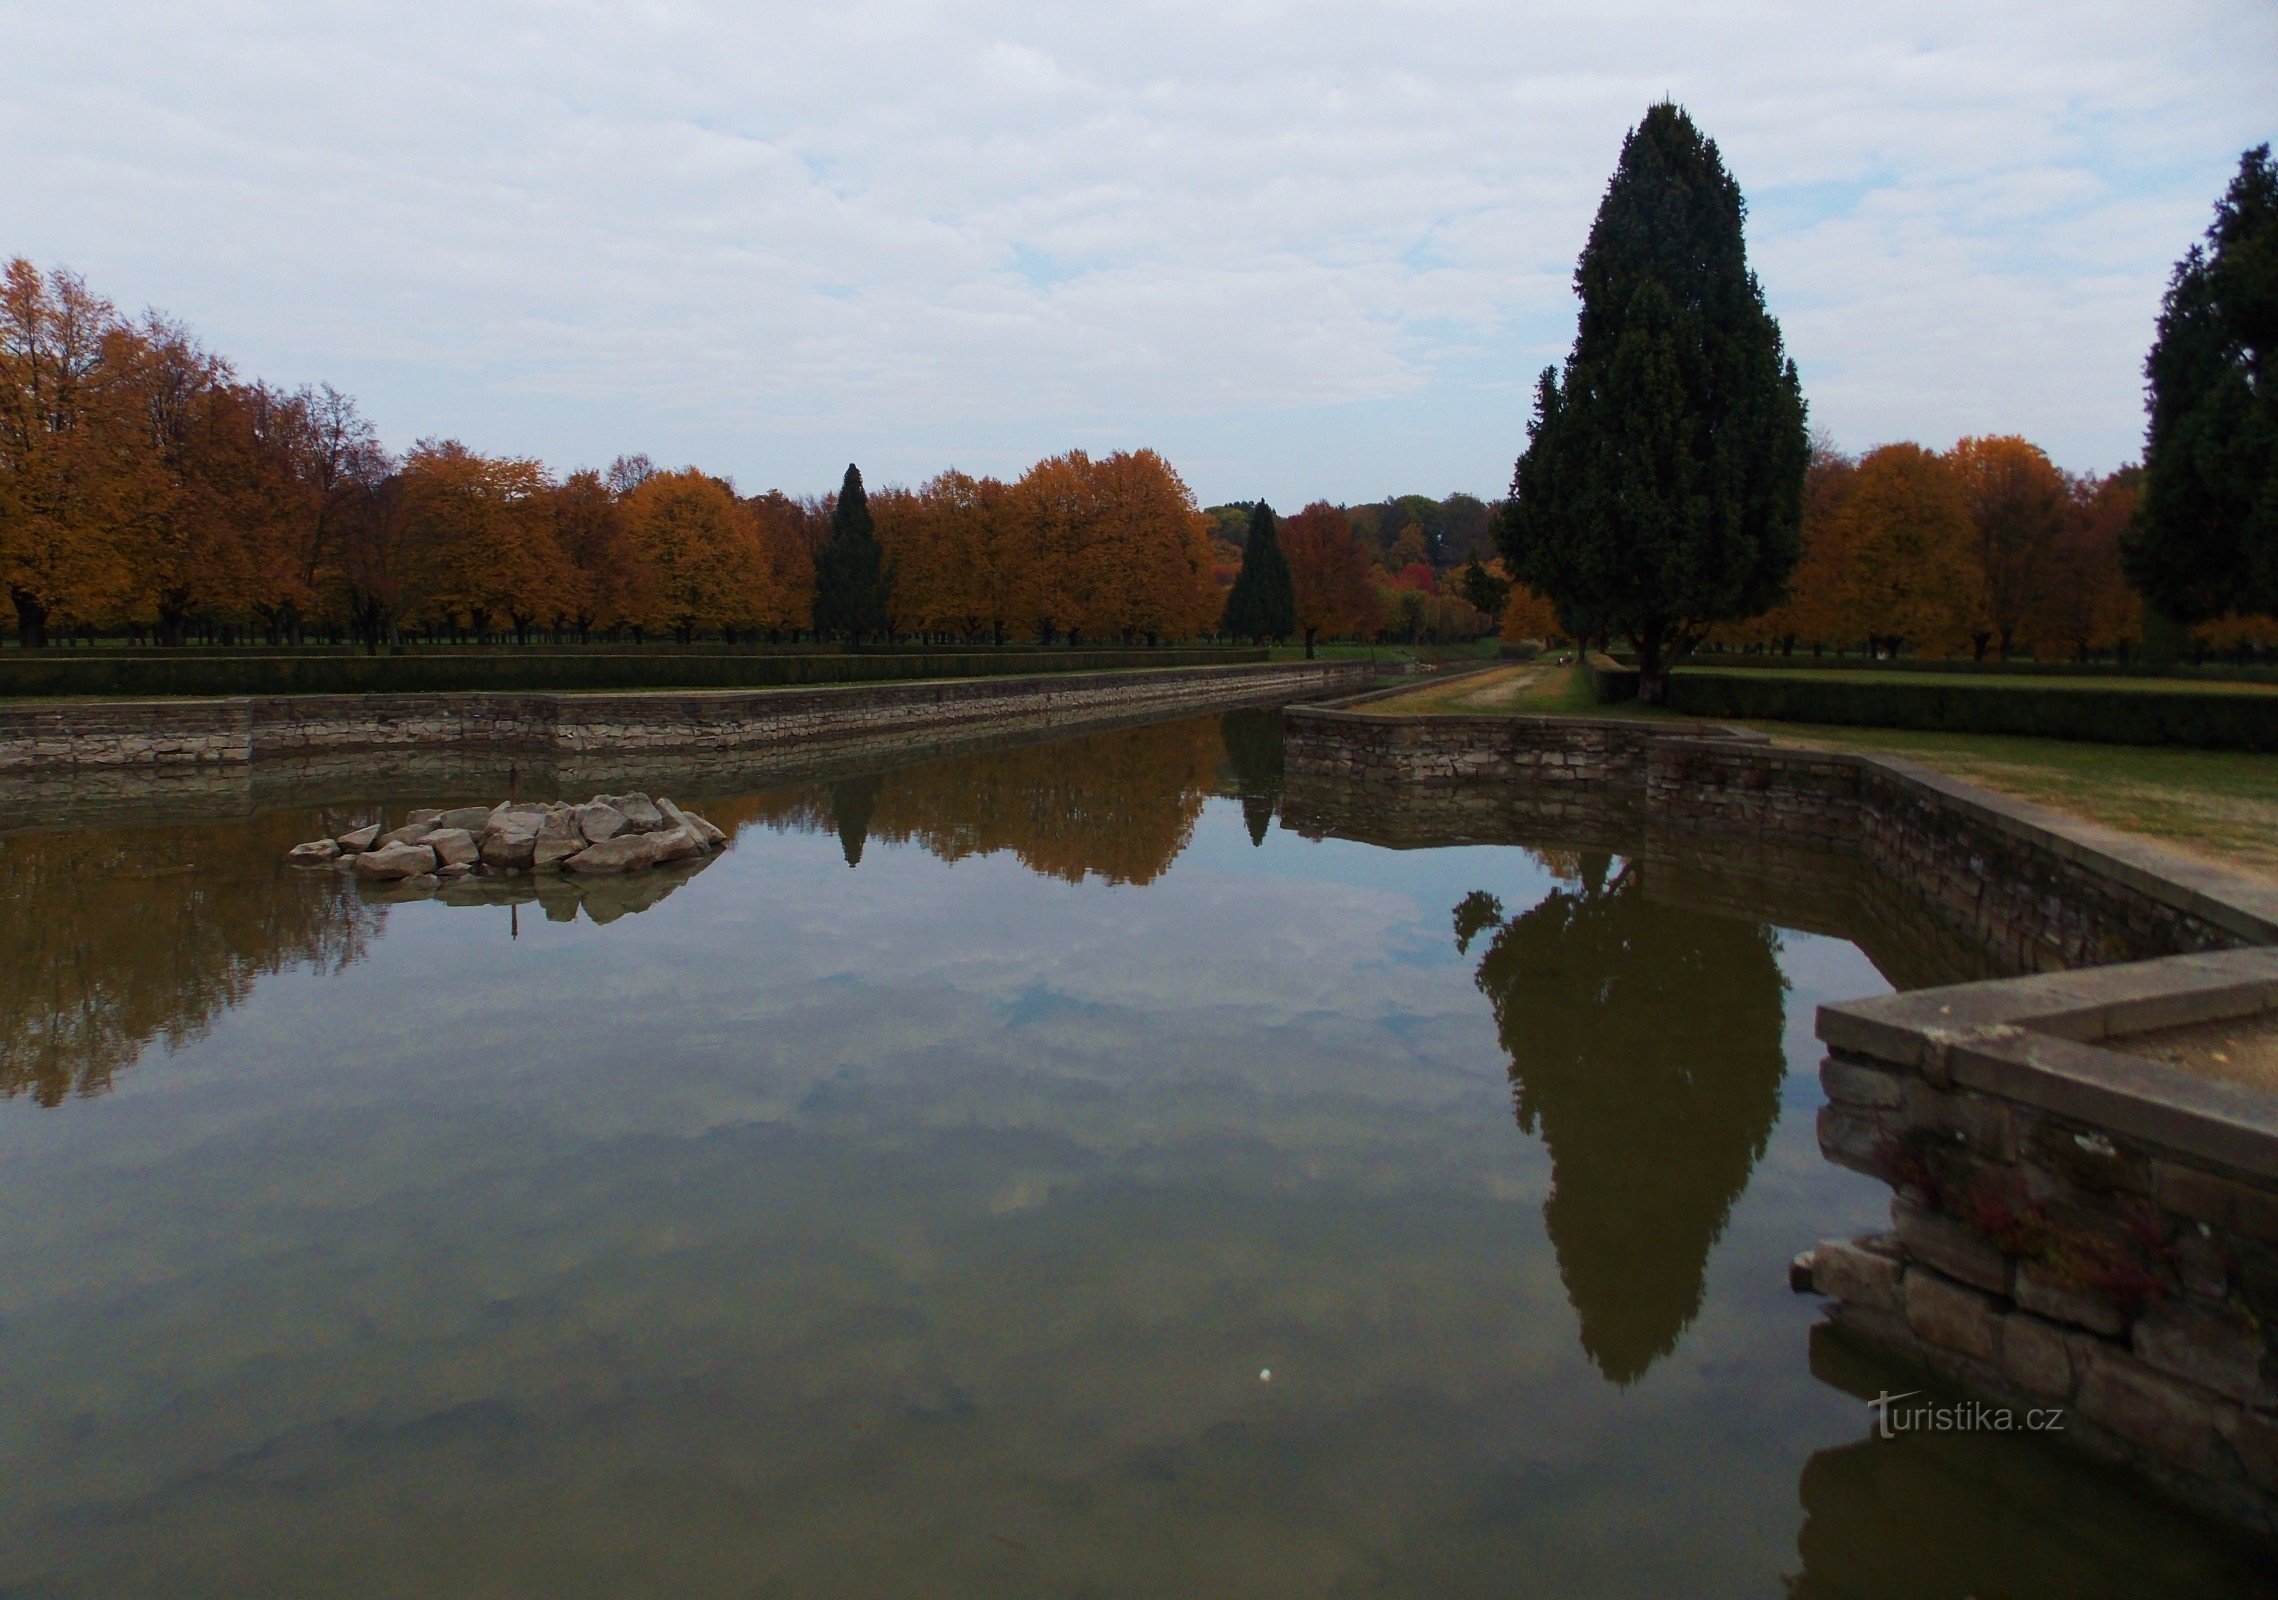 Zrcalna površina vodenih kanala u parku dvorca Holešov